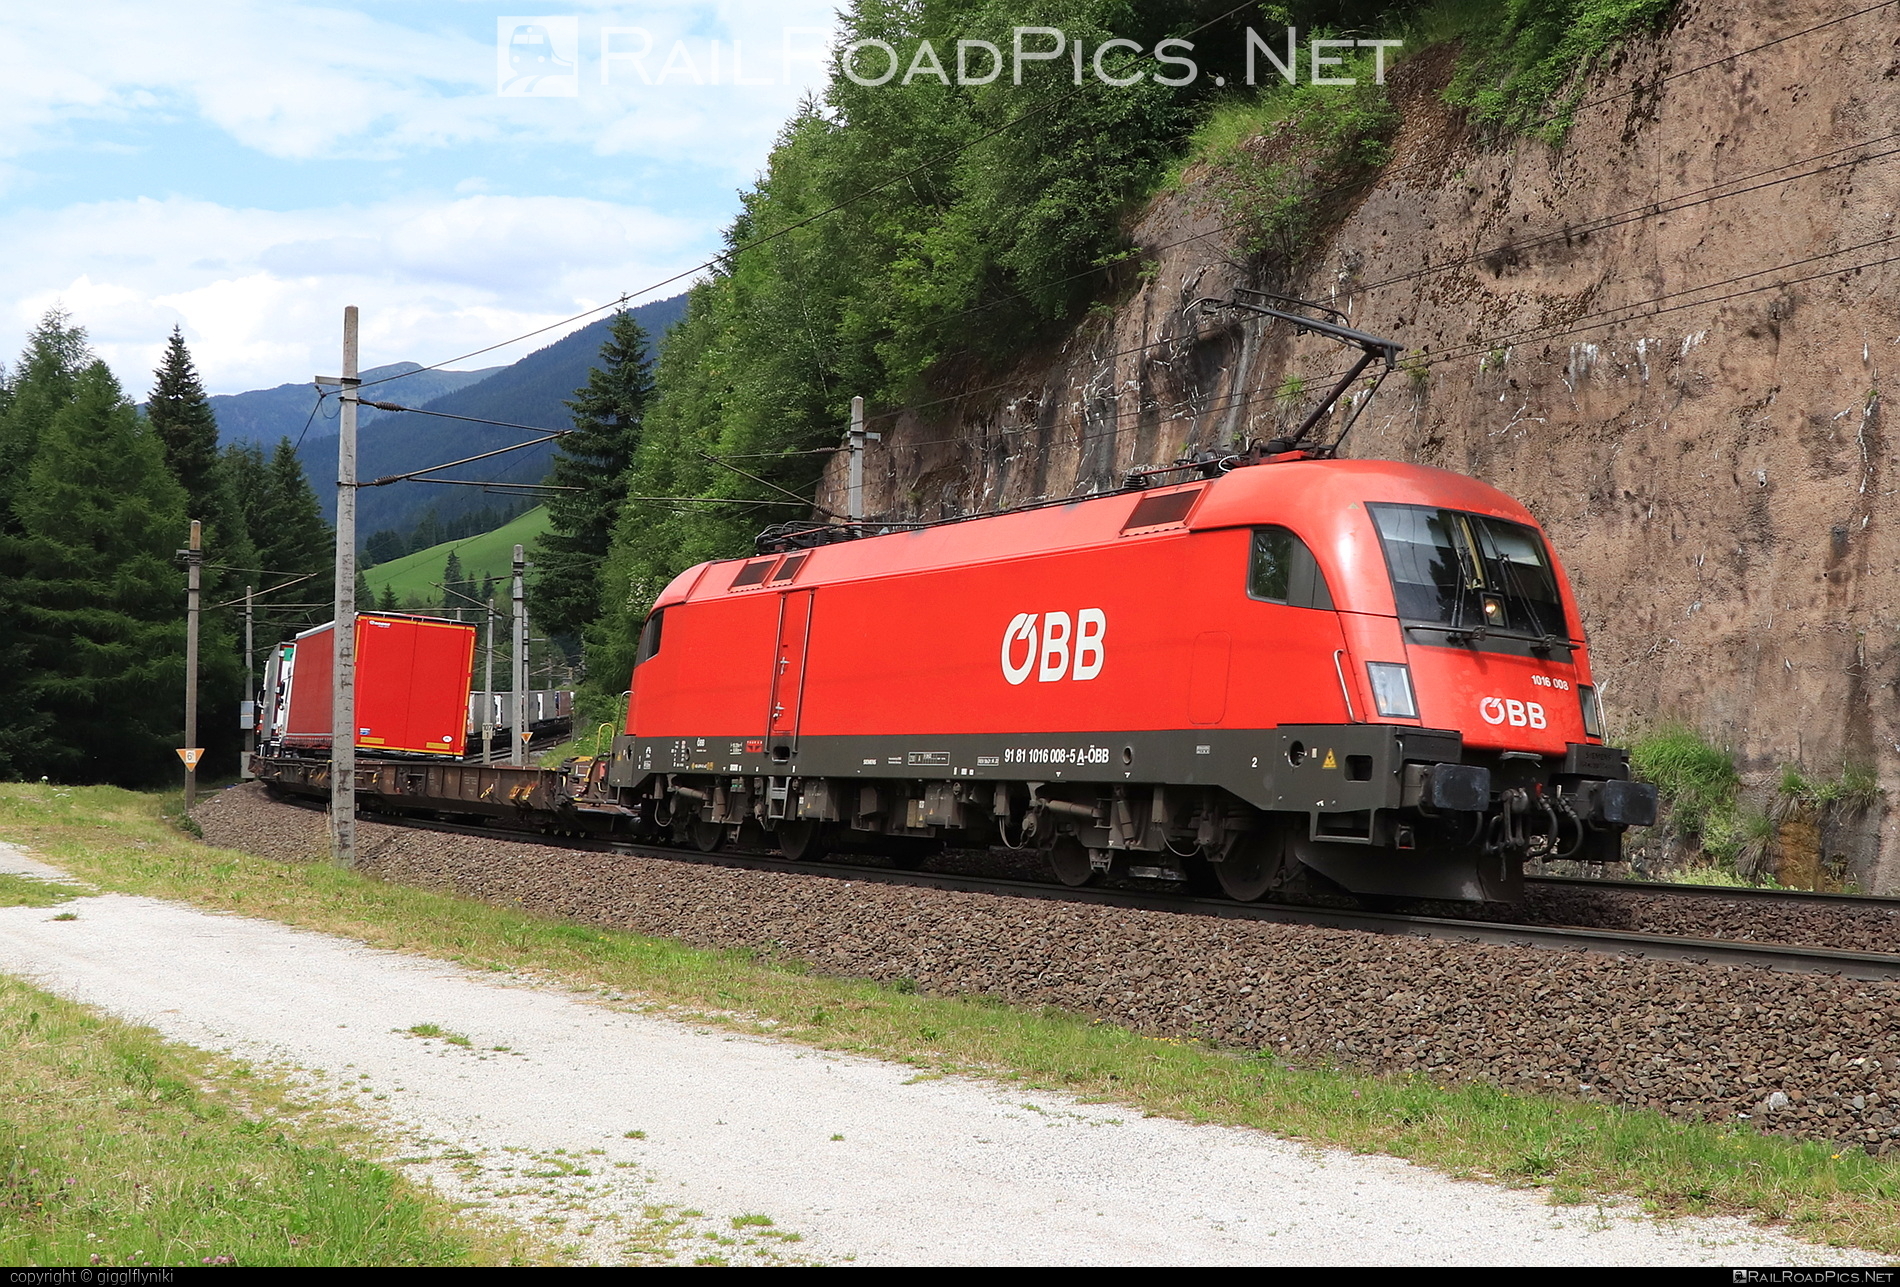 Siemens ES 64 U2 - 1016 008 operated by Rail Cargo Austria AG #es64 #es64u2 #eurosprinter #flatwagon #obb #osterreichischebundesbahnen #rcw #siemens #siemensEs64 #siemensEs64u2 #siemenstaurus #taurus #tauruslocomotive #truck